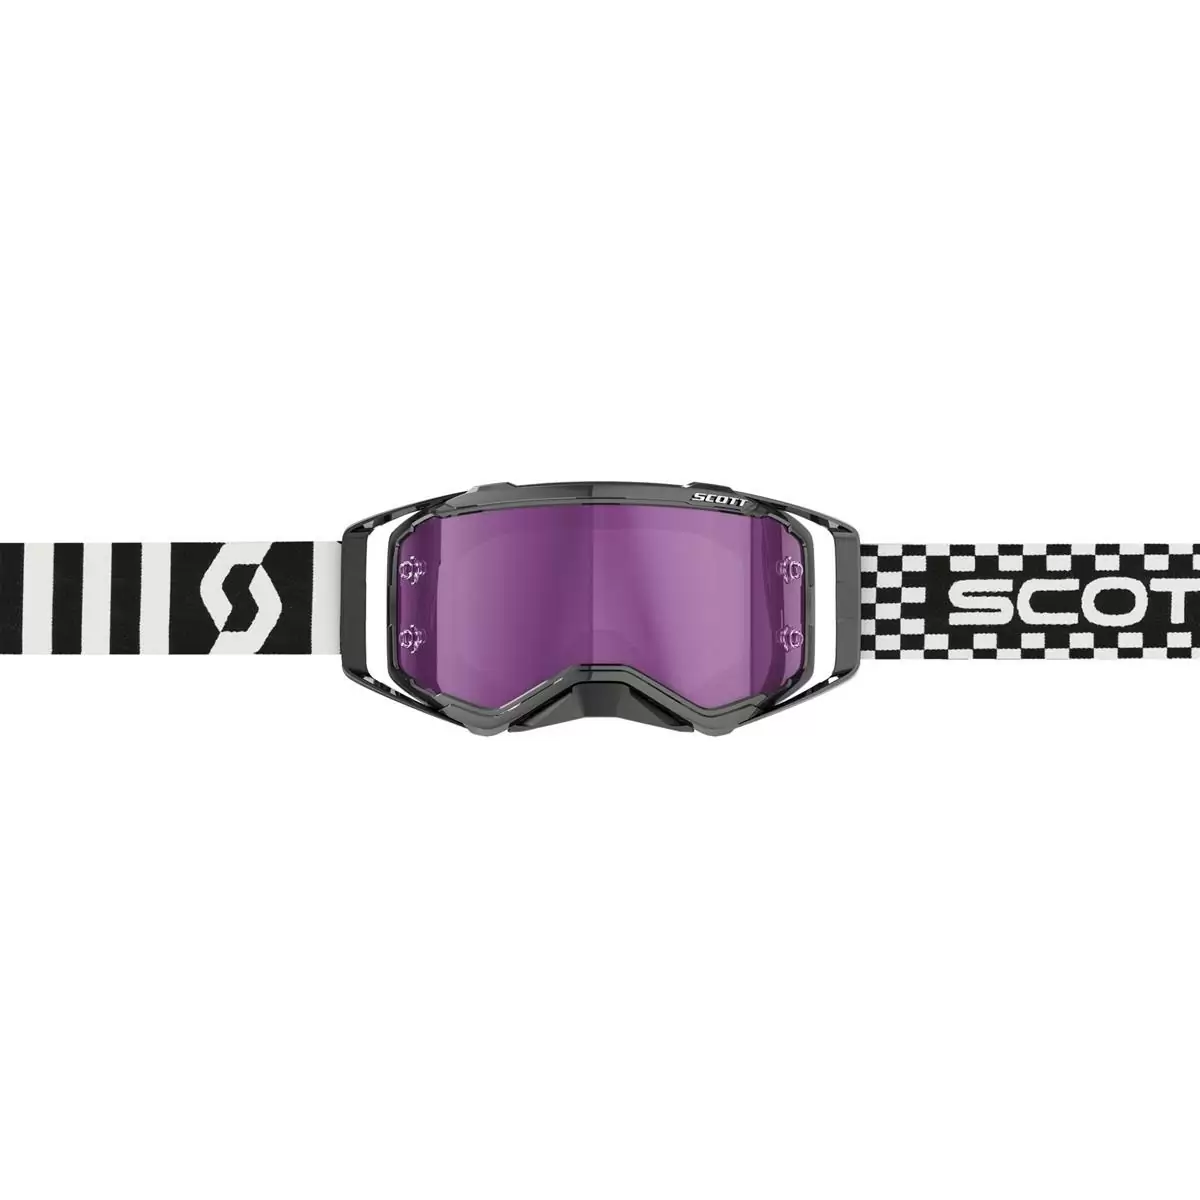 Prospect Mask Weiß/Schwarz mit Chrome Works Purple Lens #1